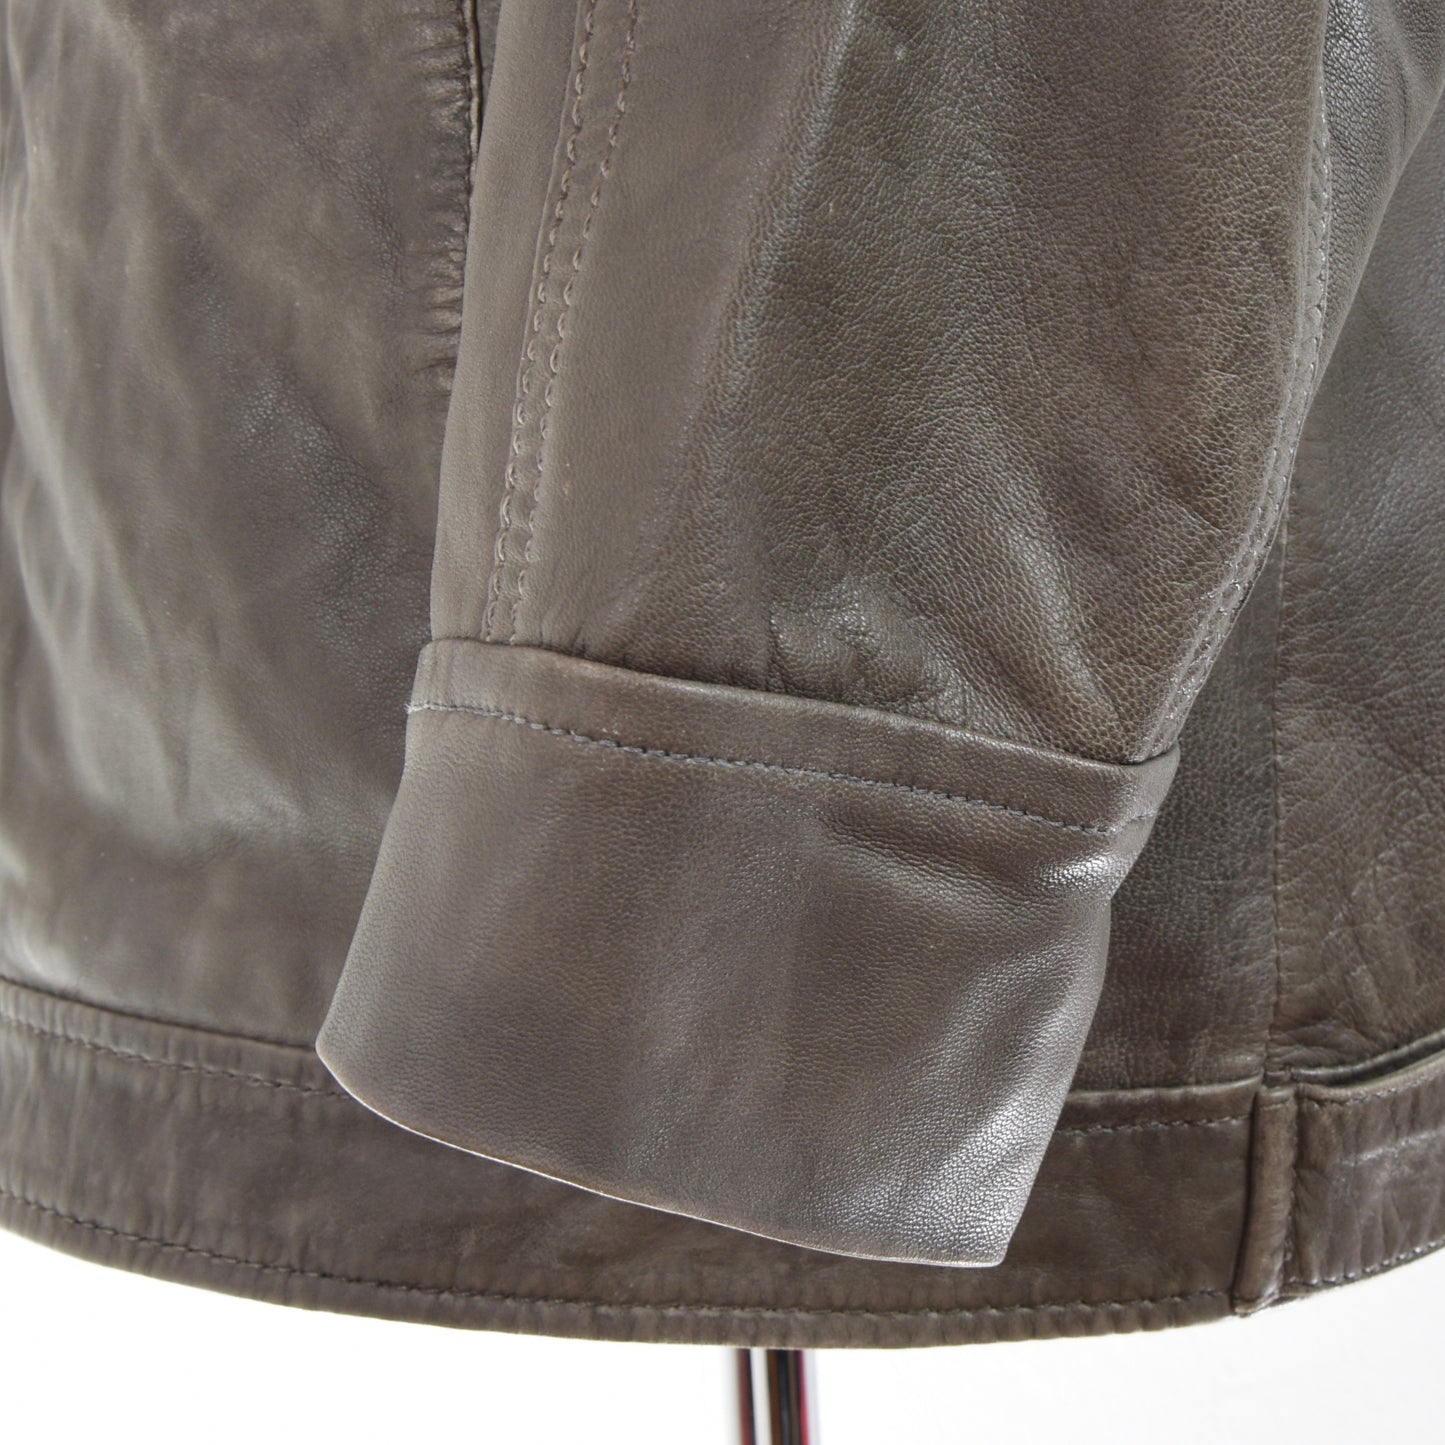 Walbusch Nappa Leather Jacket - Grey